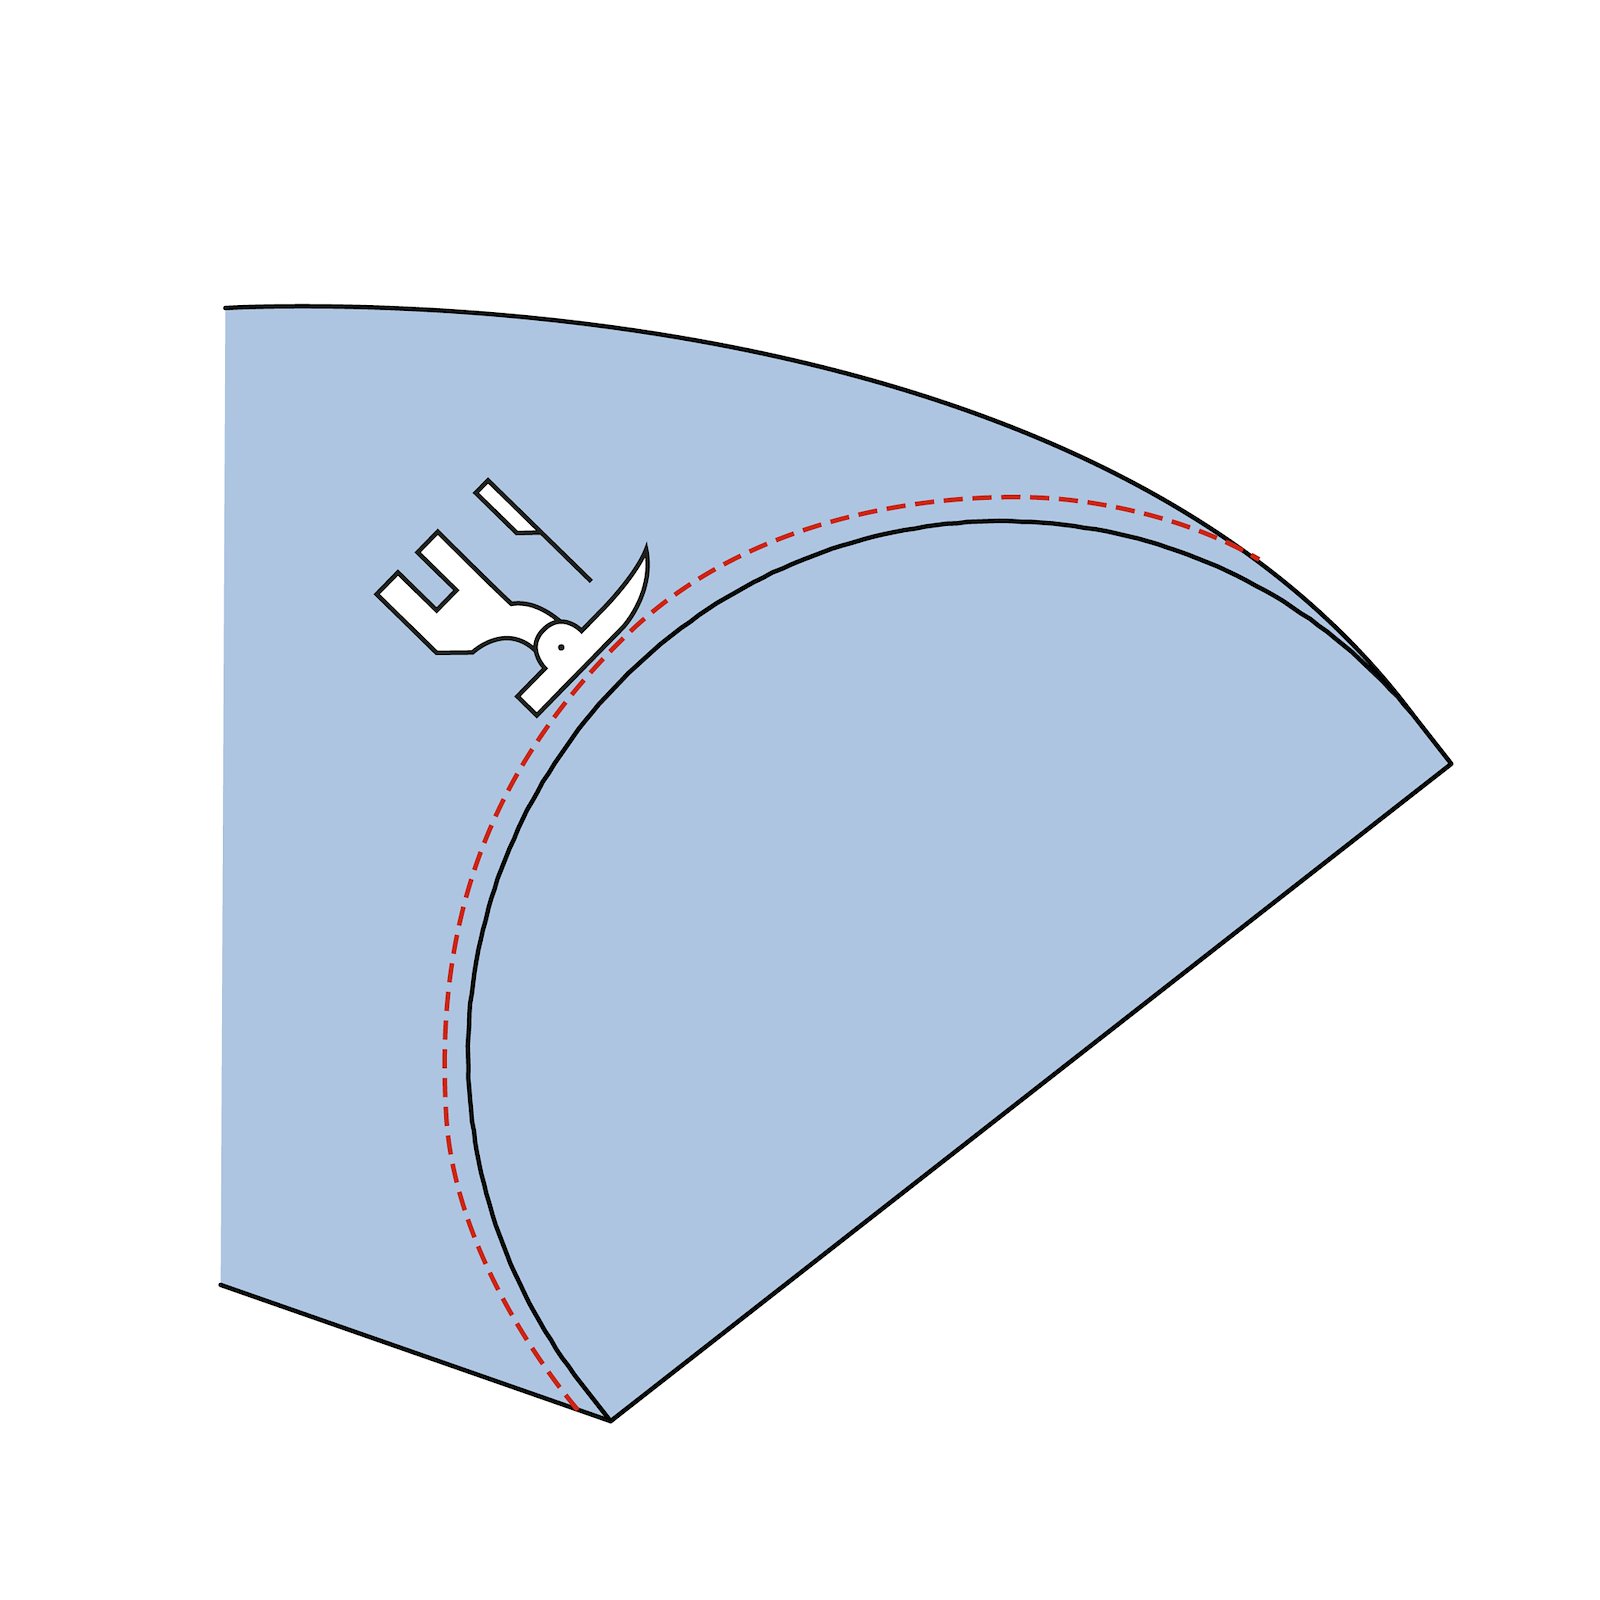 Sewing pattern: Headrest cushion cover DIY5021-step8.jpg